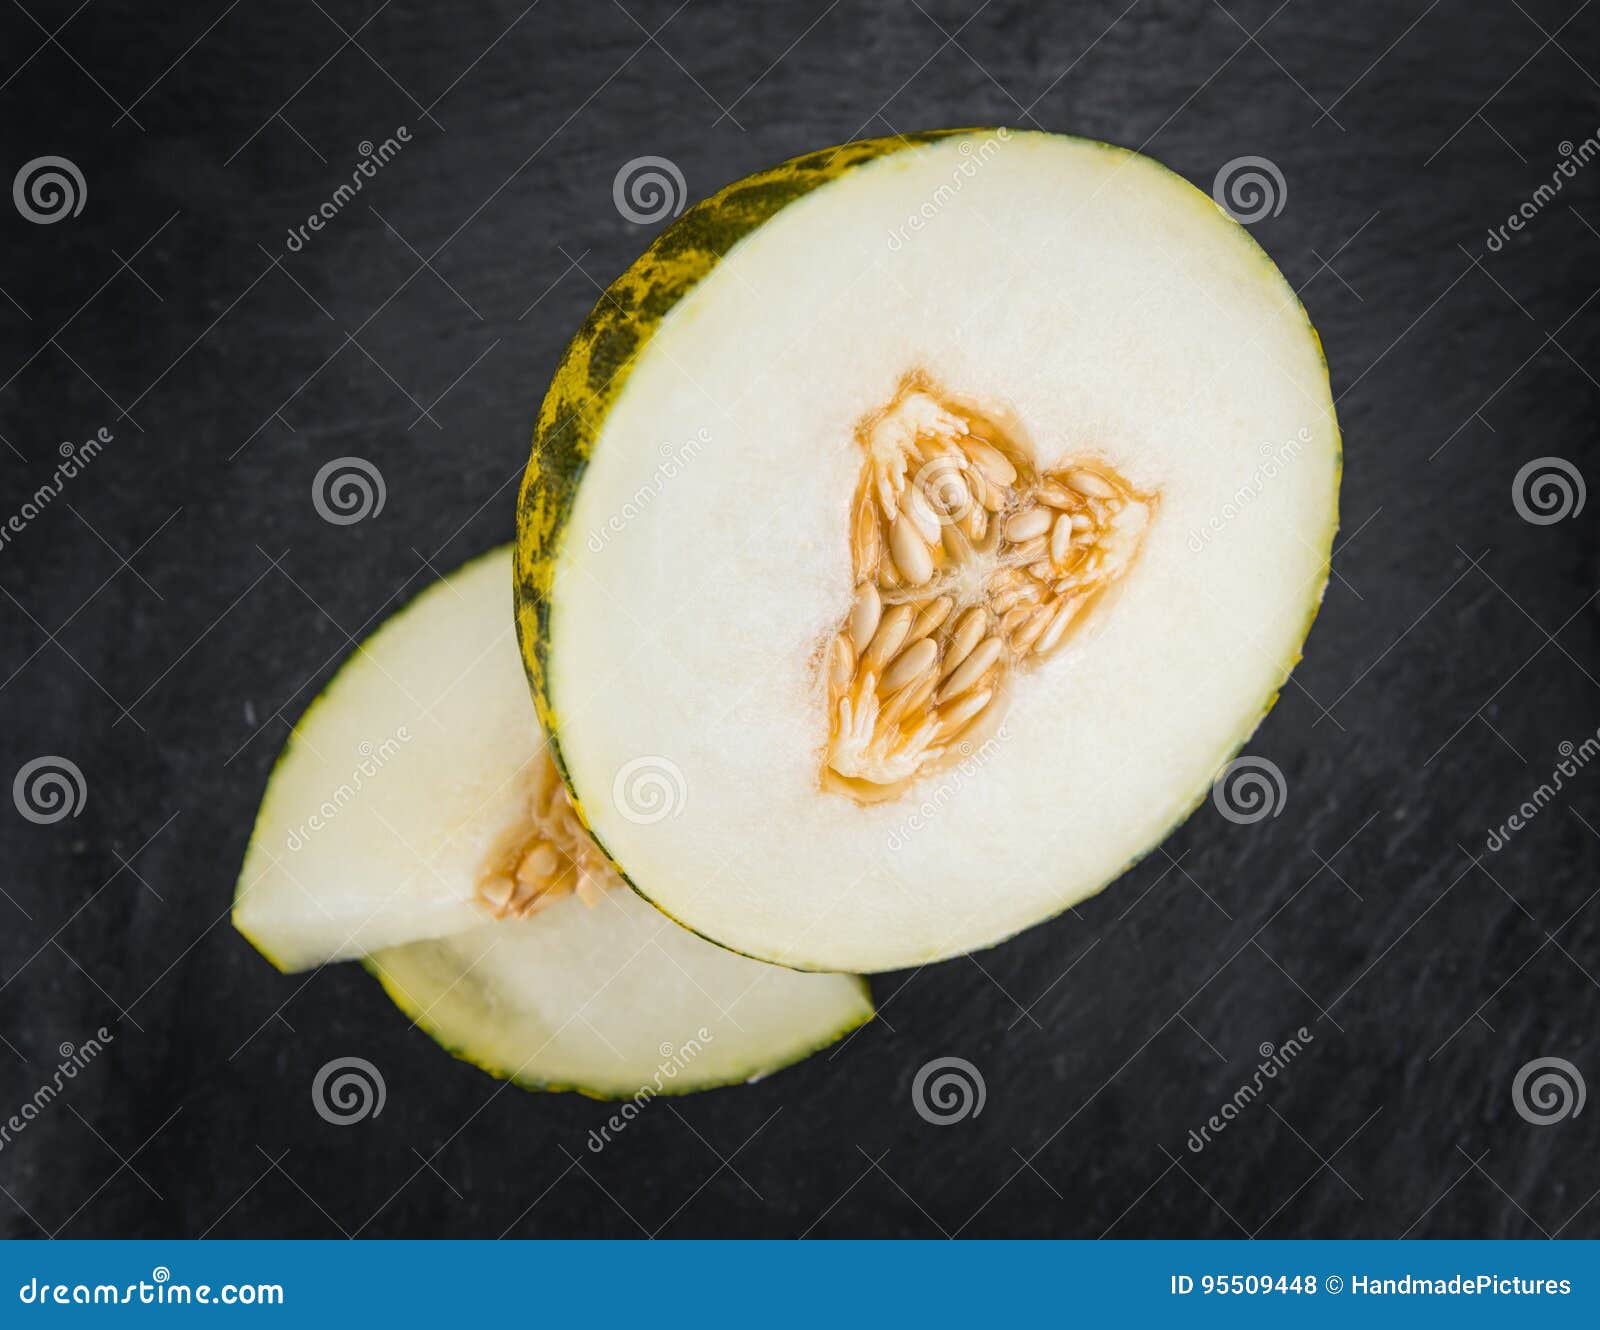 some futuro melons on a dark slate slab